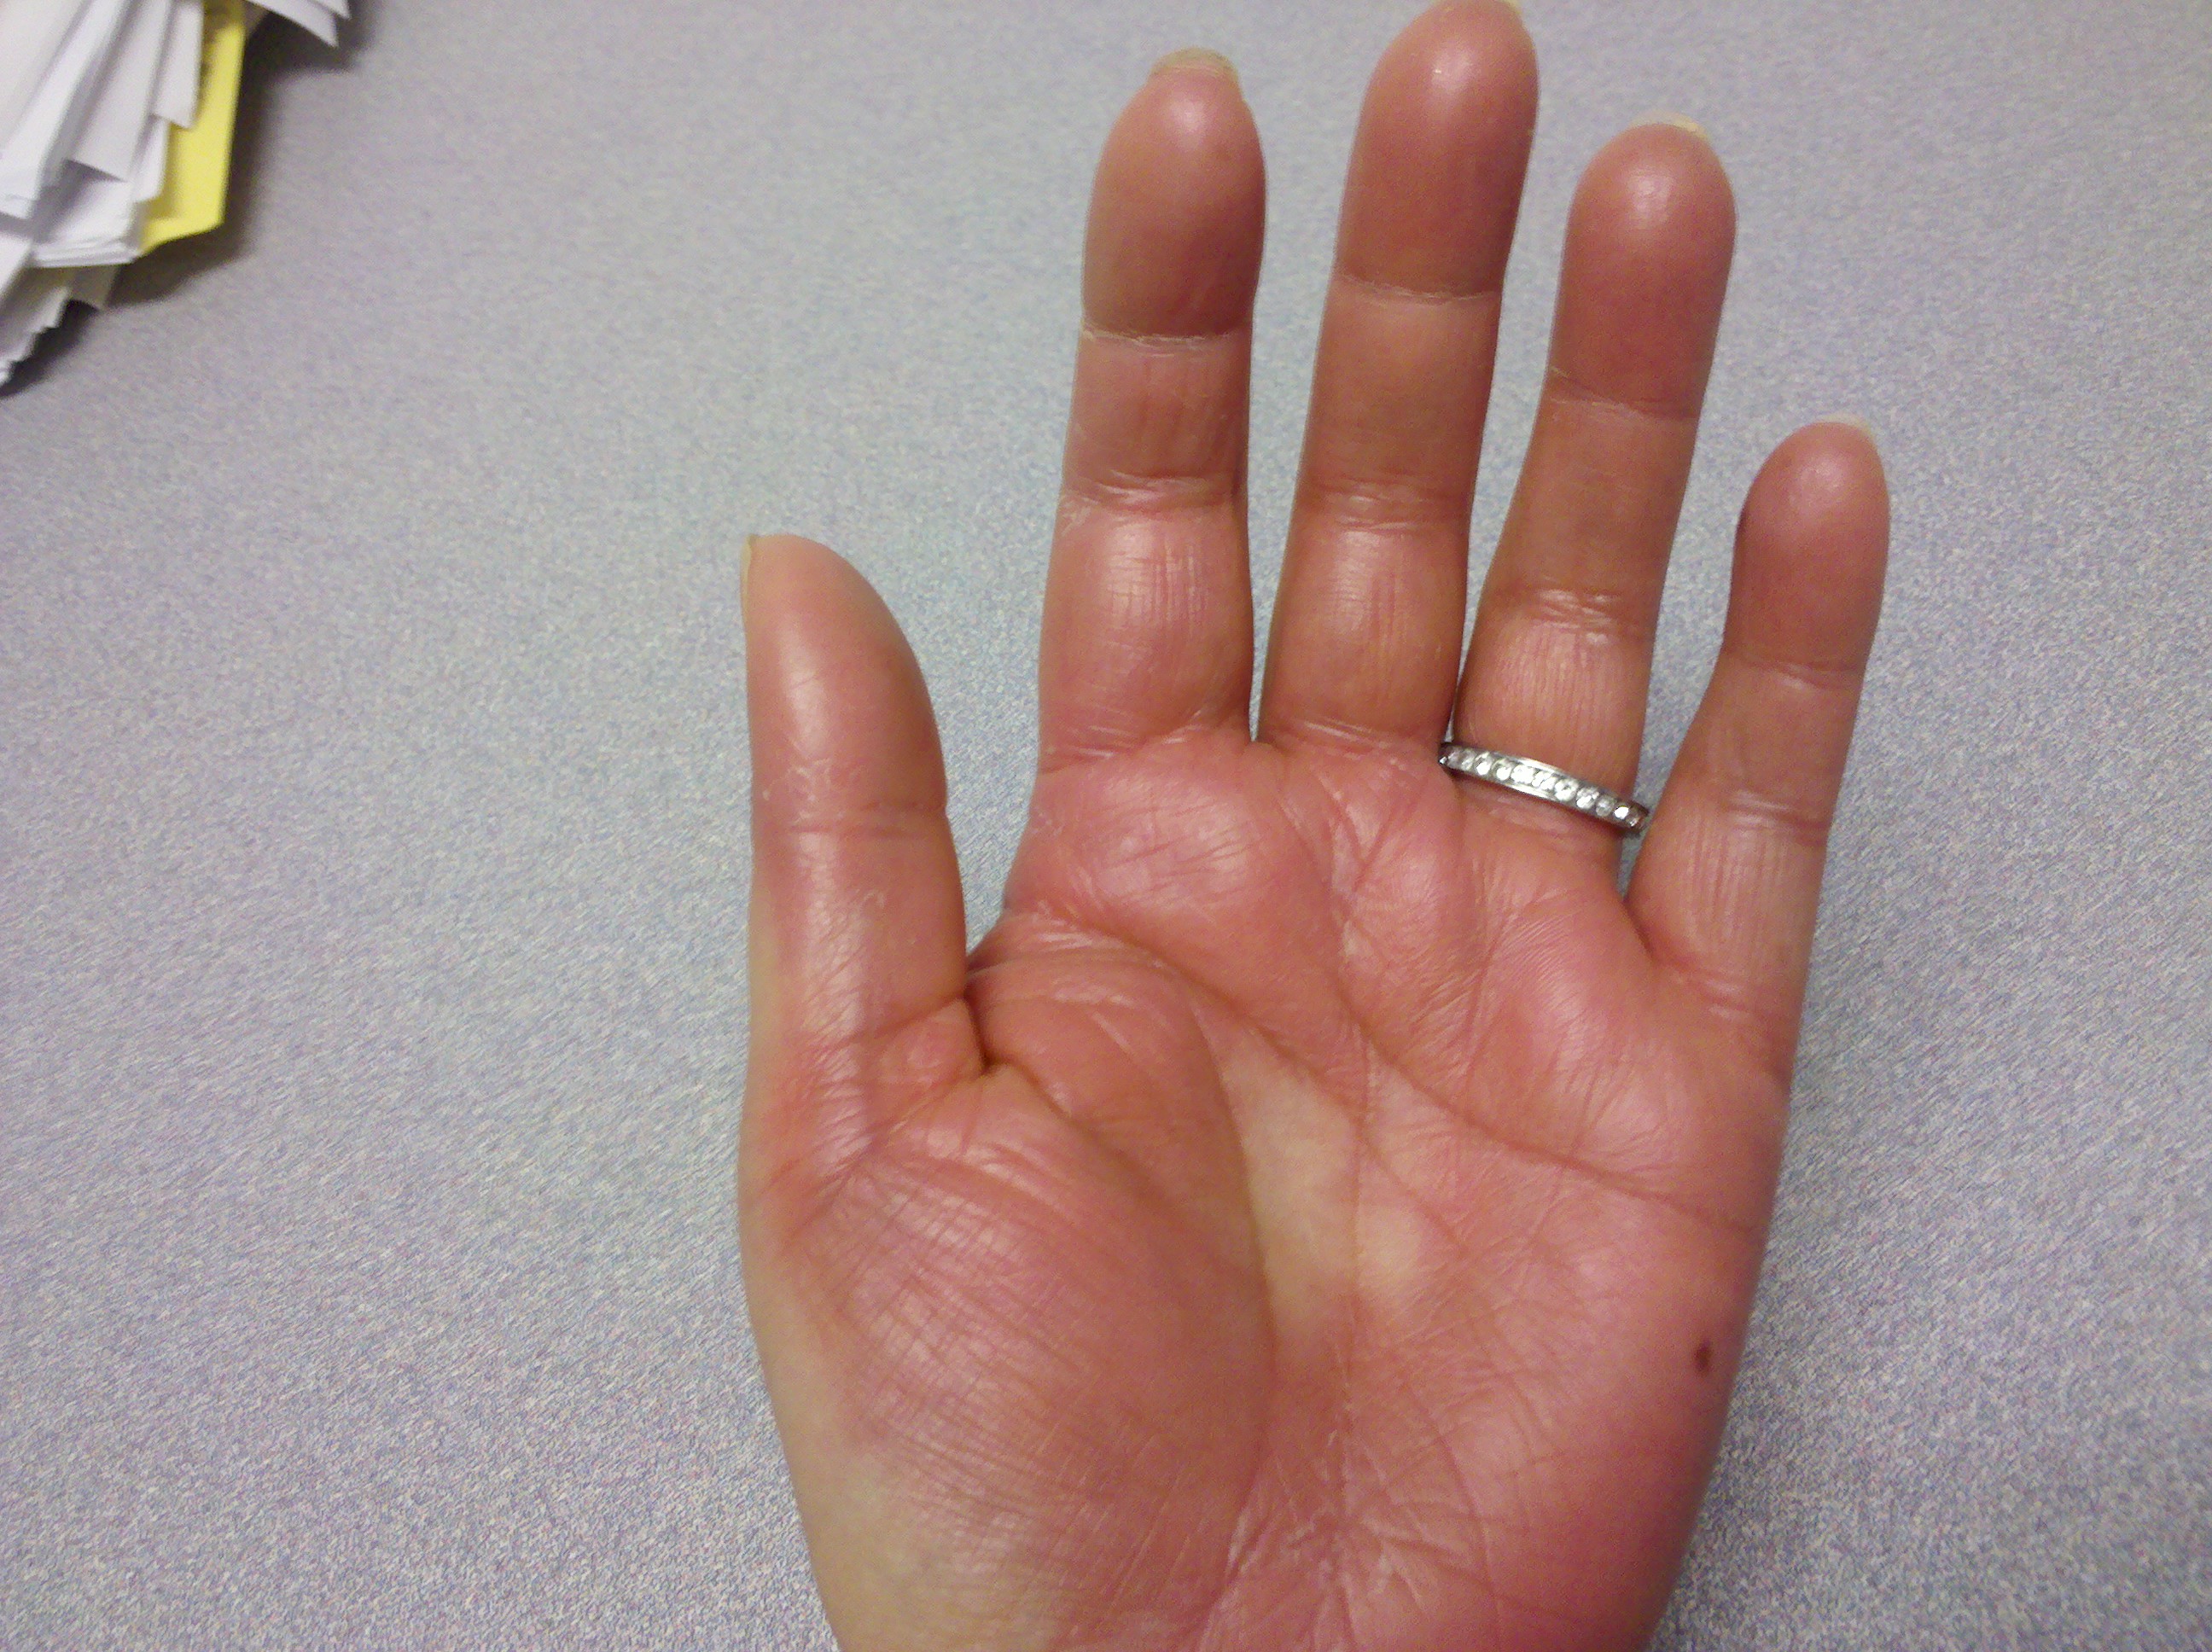 Top 11 Doctor Insights on shingles rash on hands - HealthTap